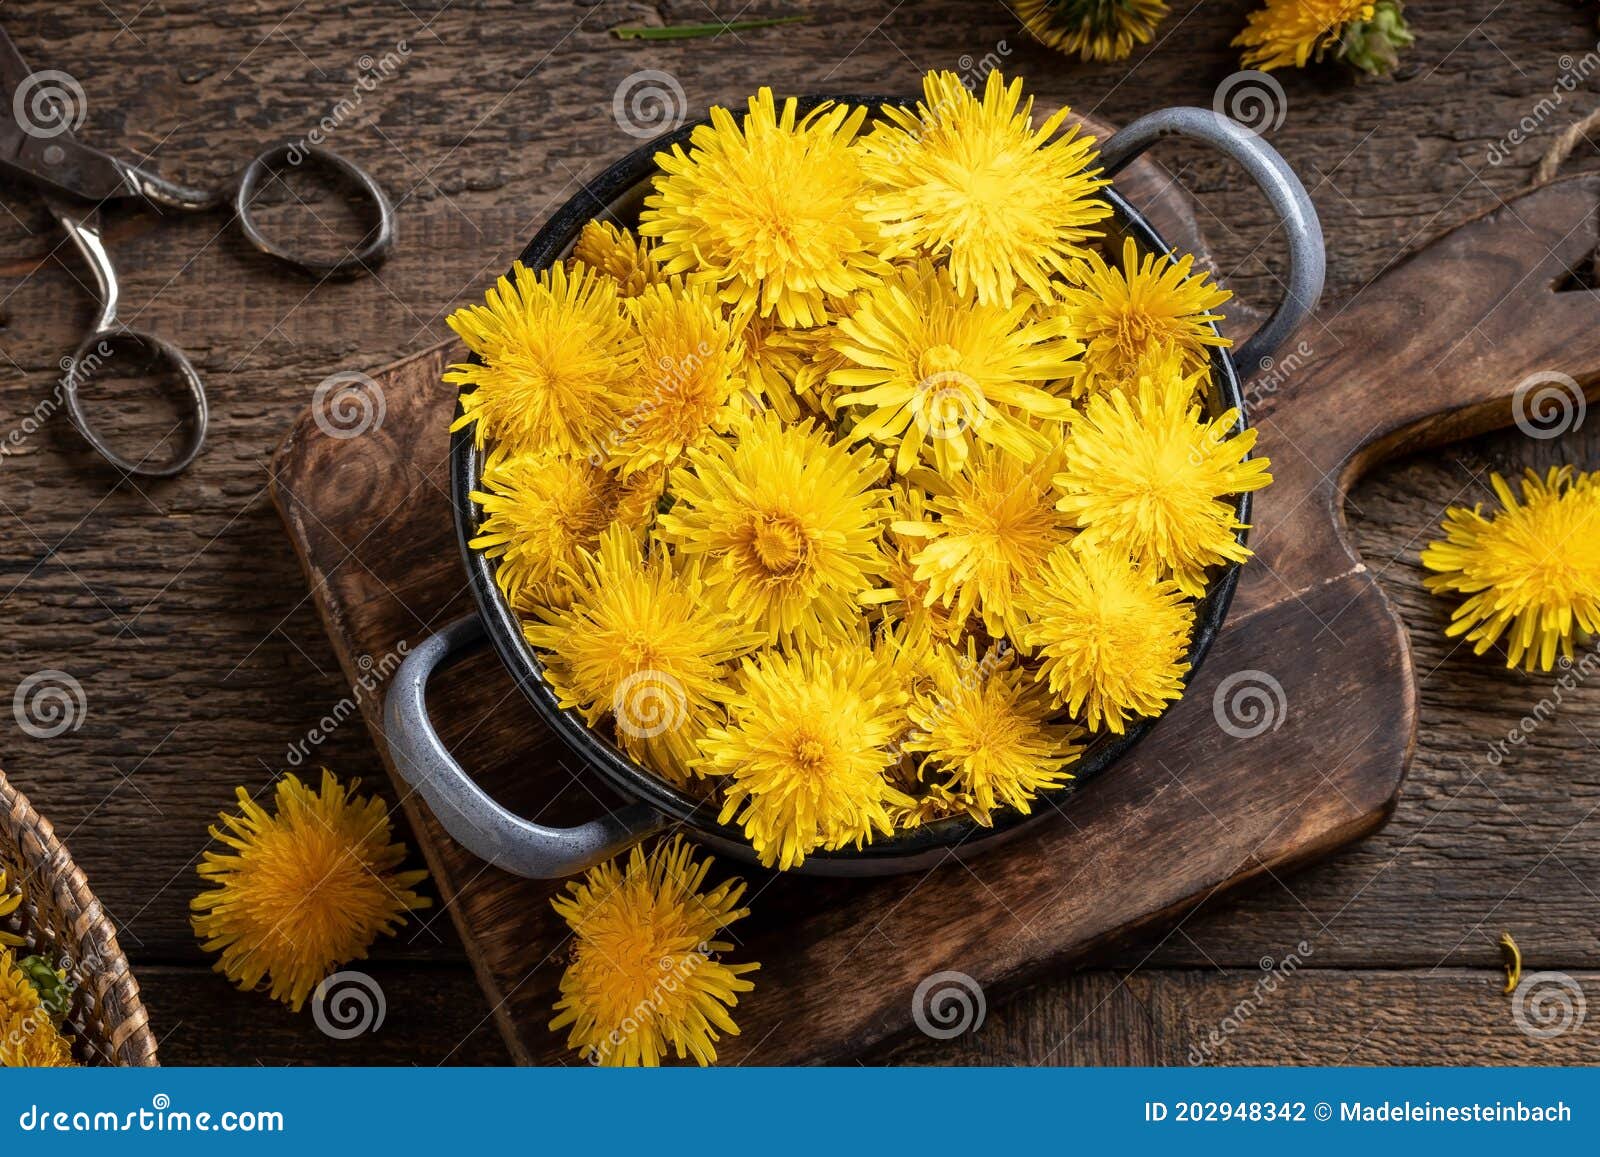 fresh dandelion flowers in a pot on a table